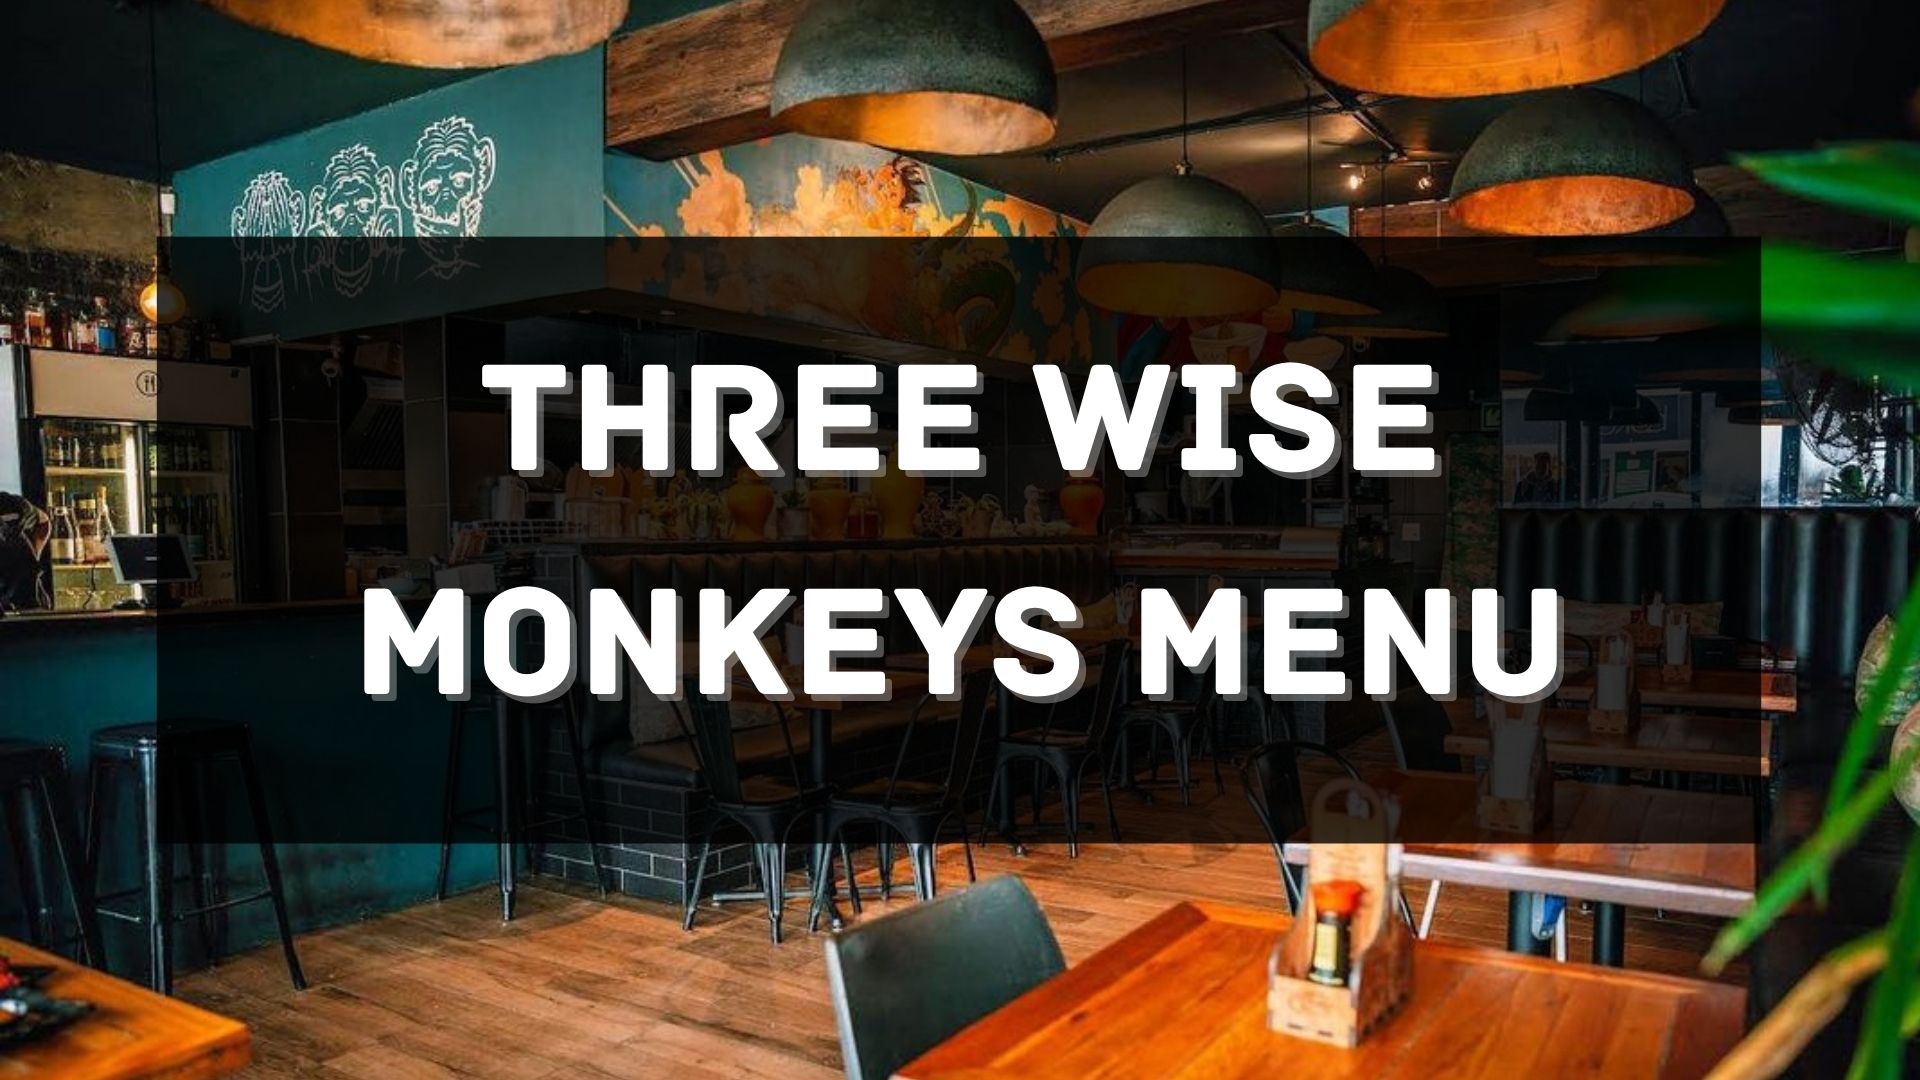 Three Wise Monkeys Menu South Africa